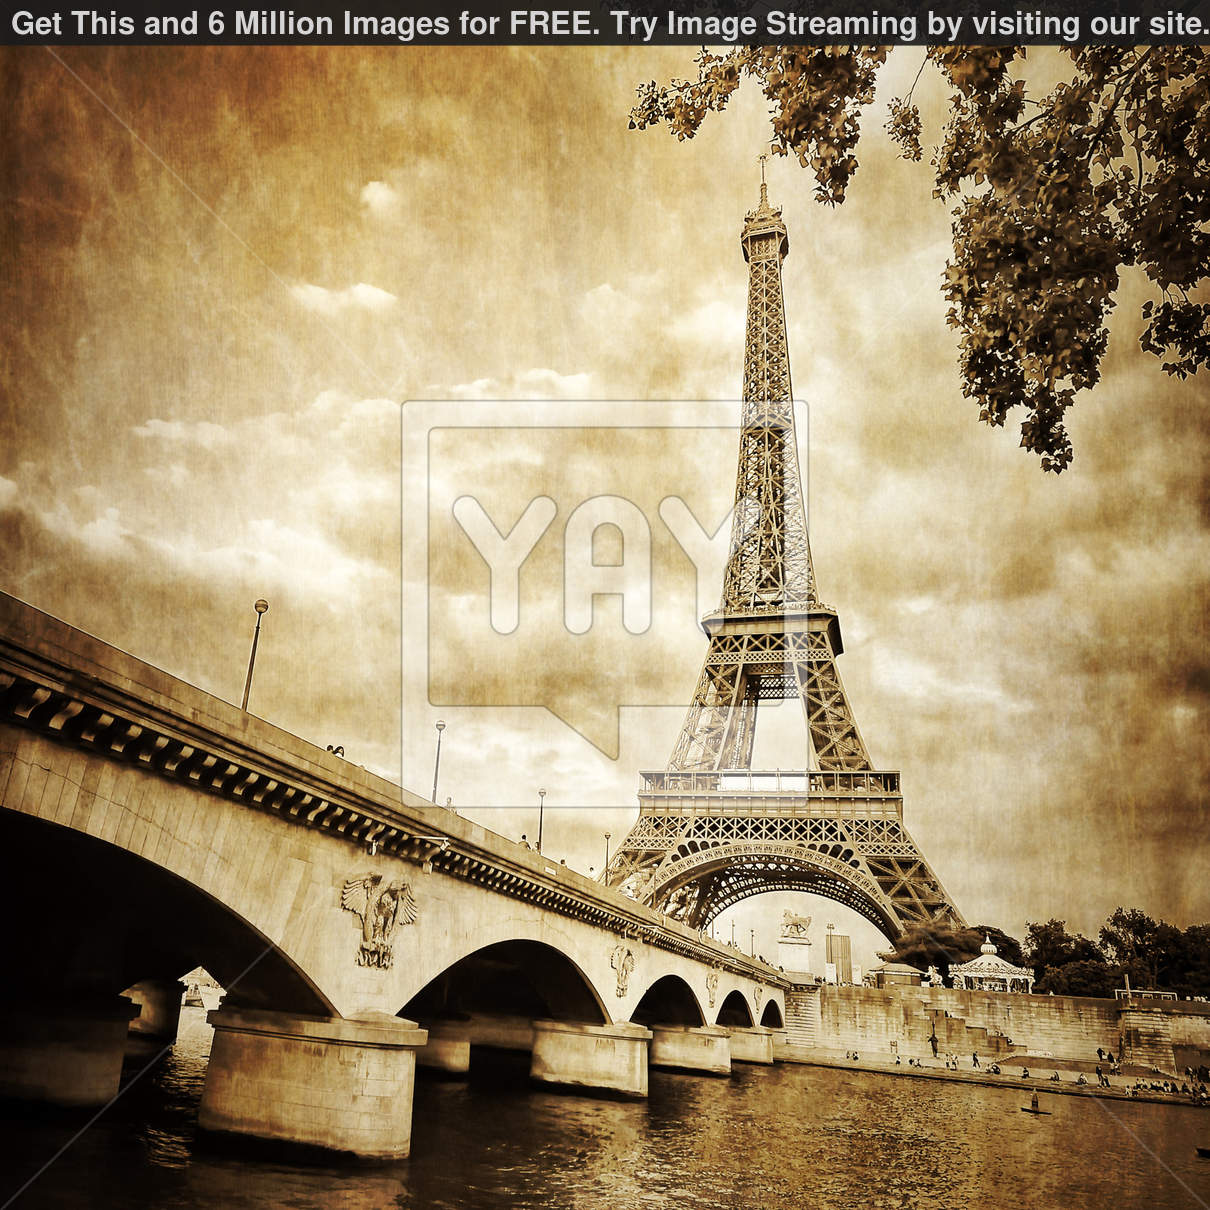 Royalty Image Of Eiffel Tower Monochrome Vintage With Bridge